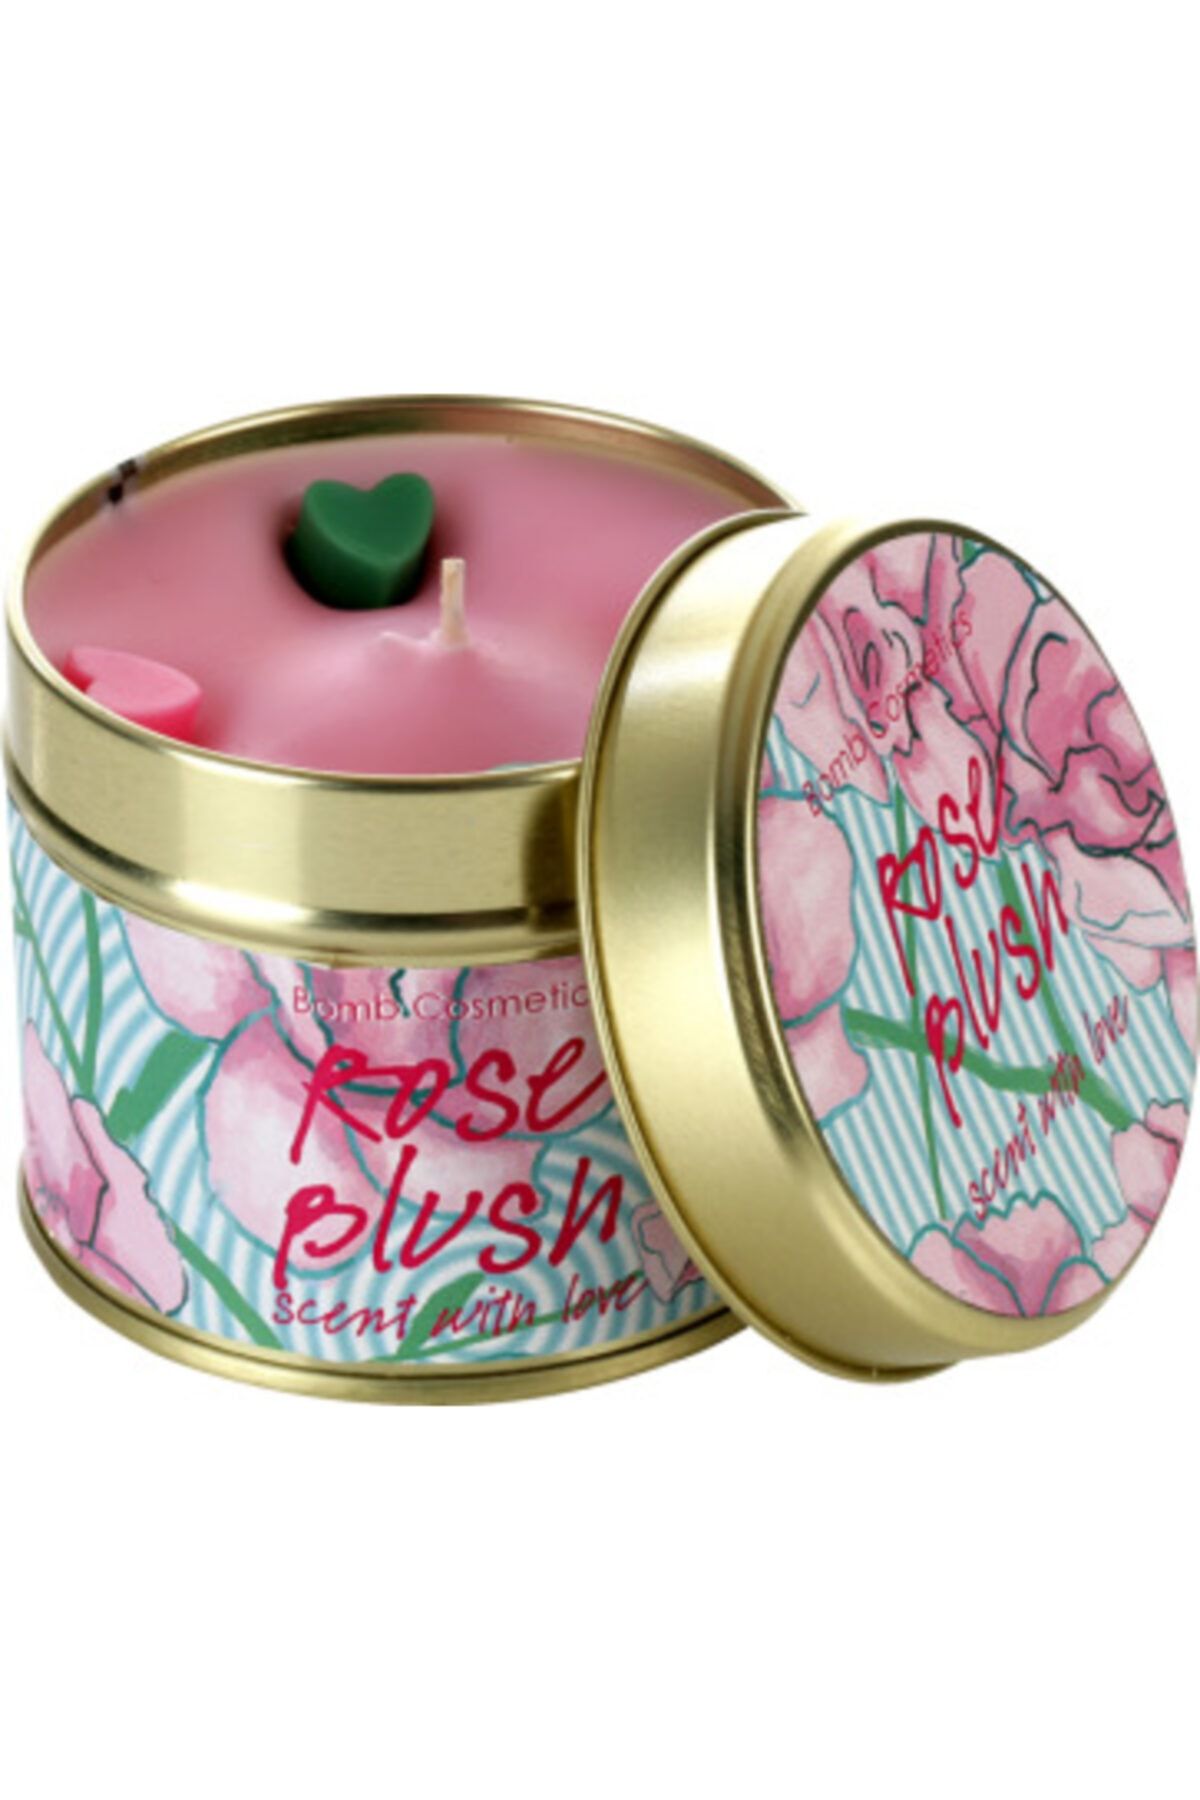 Bomb Cosmetics Rose Blush Teneke Mum